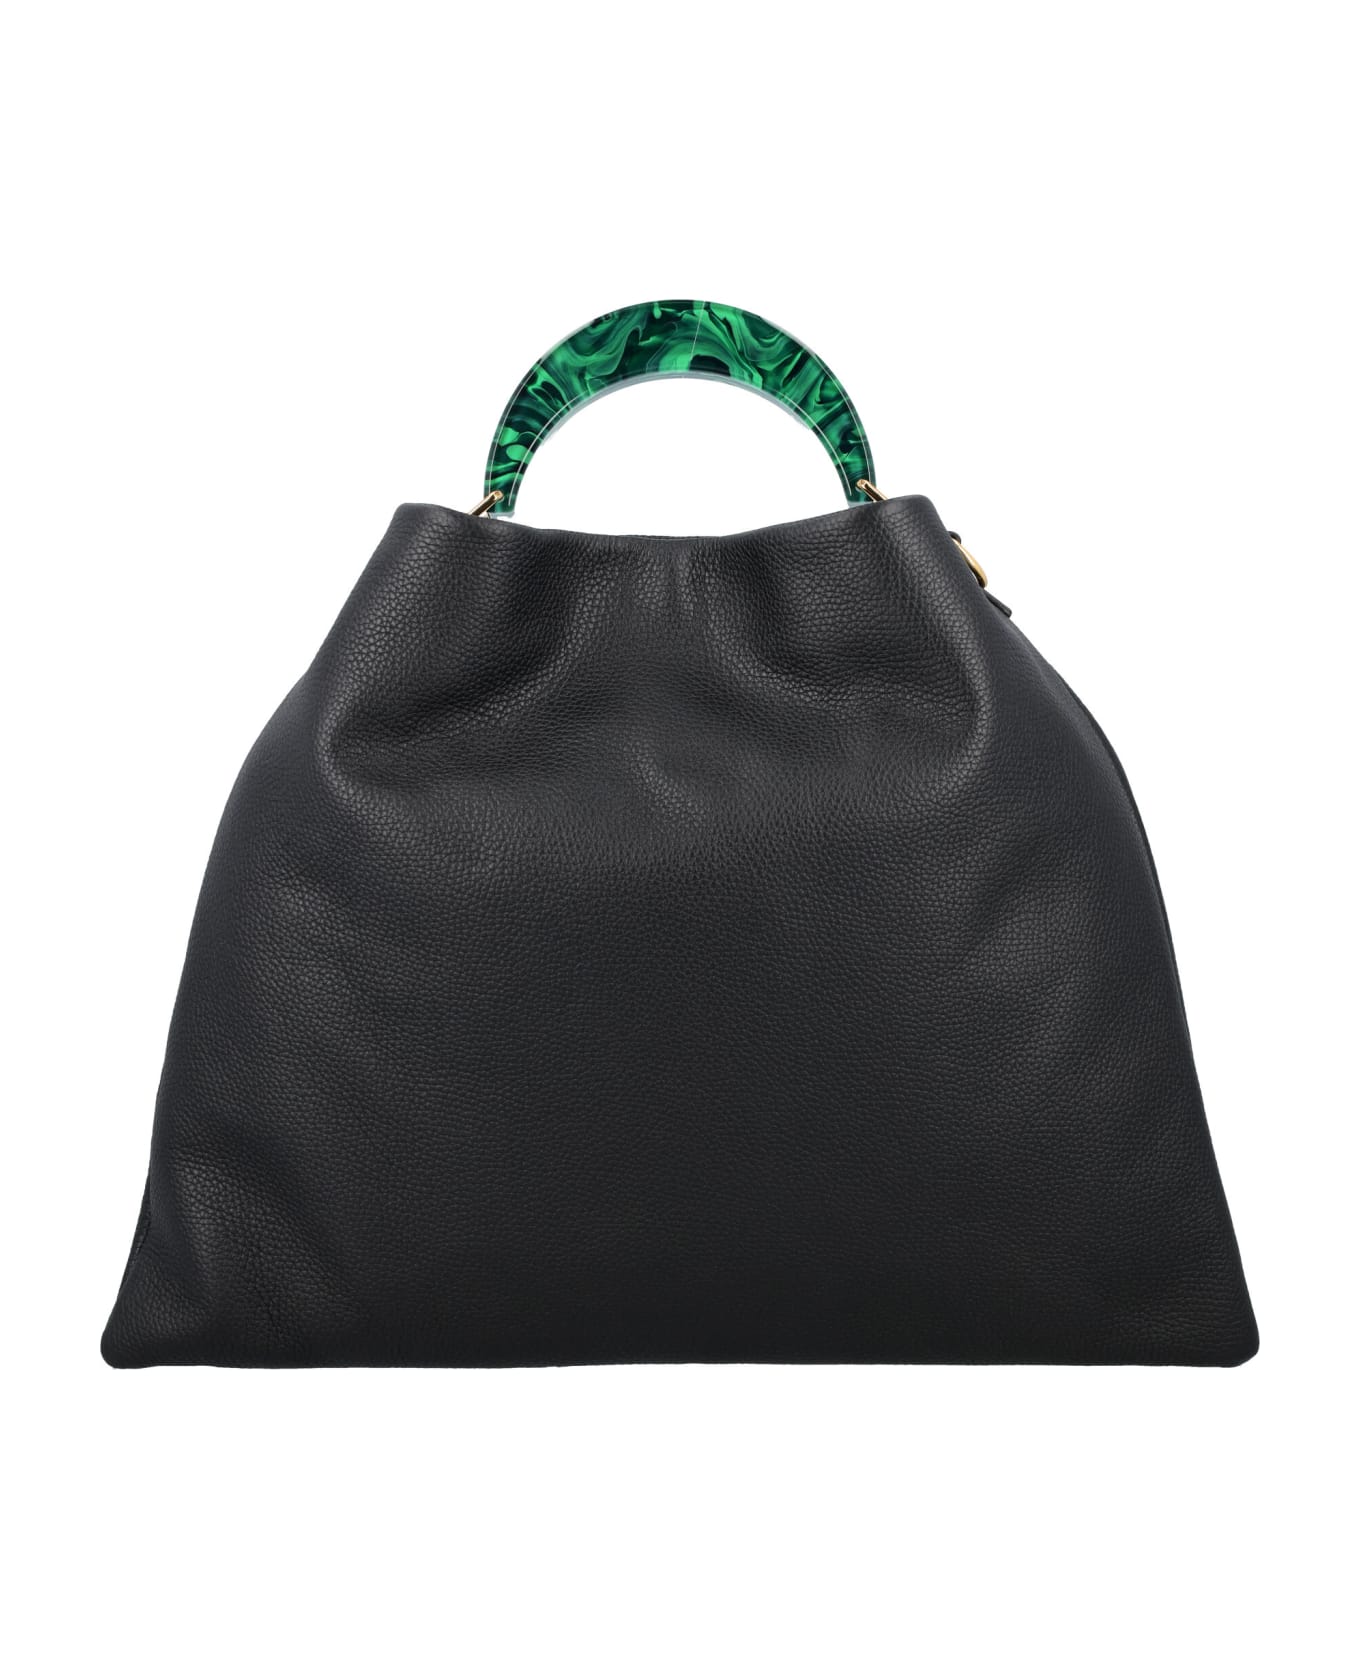 Marni Small 'venice' Black Leather Bag - Black